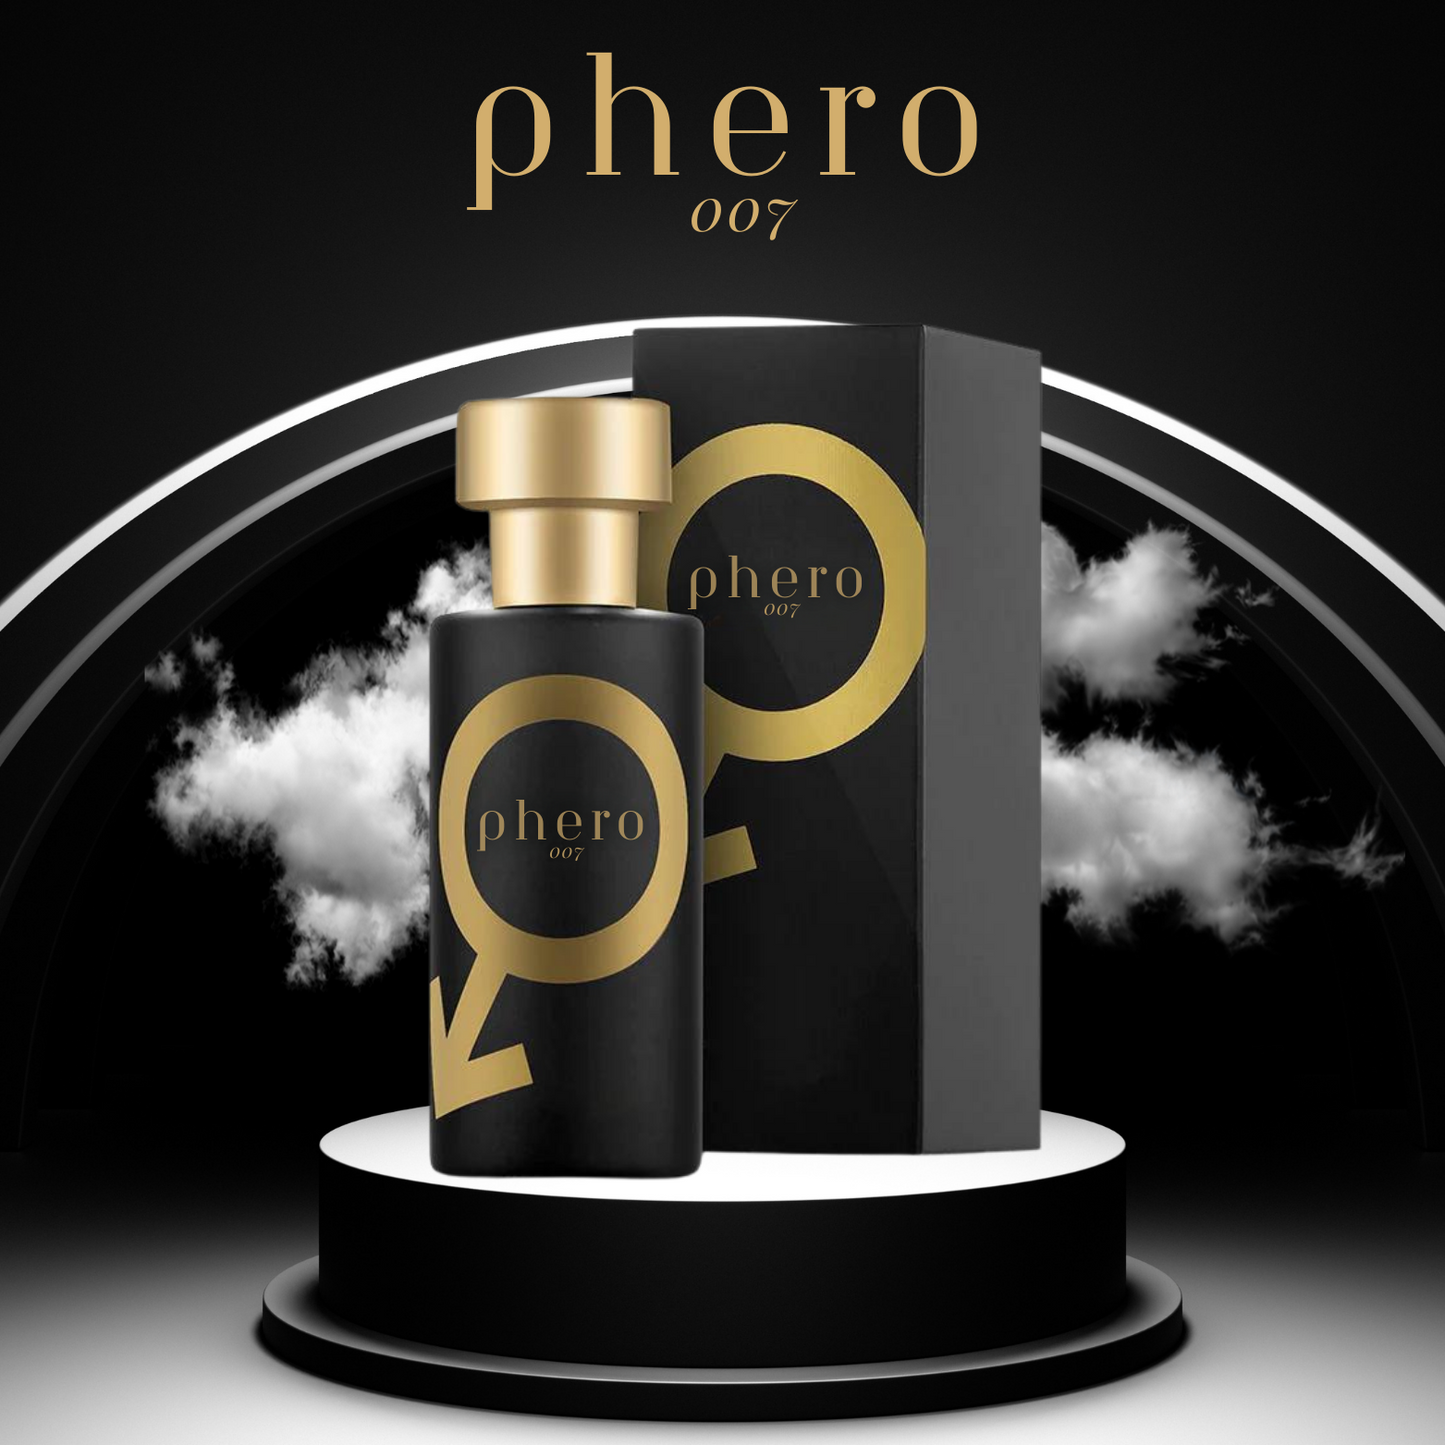 PheroMan® - Pheromone perfume for men